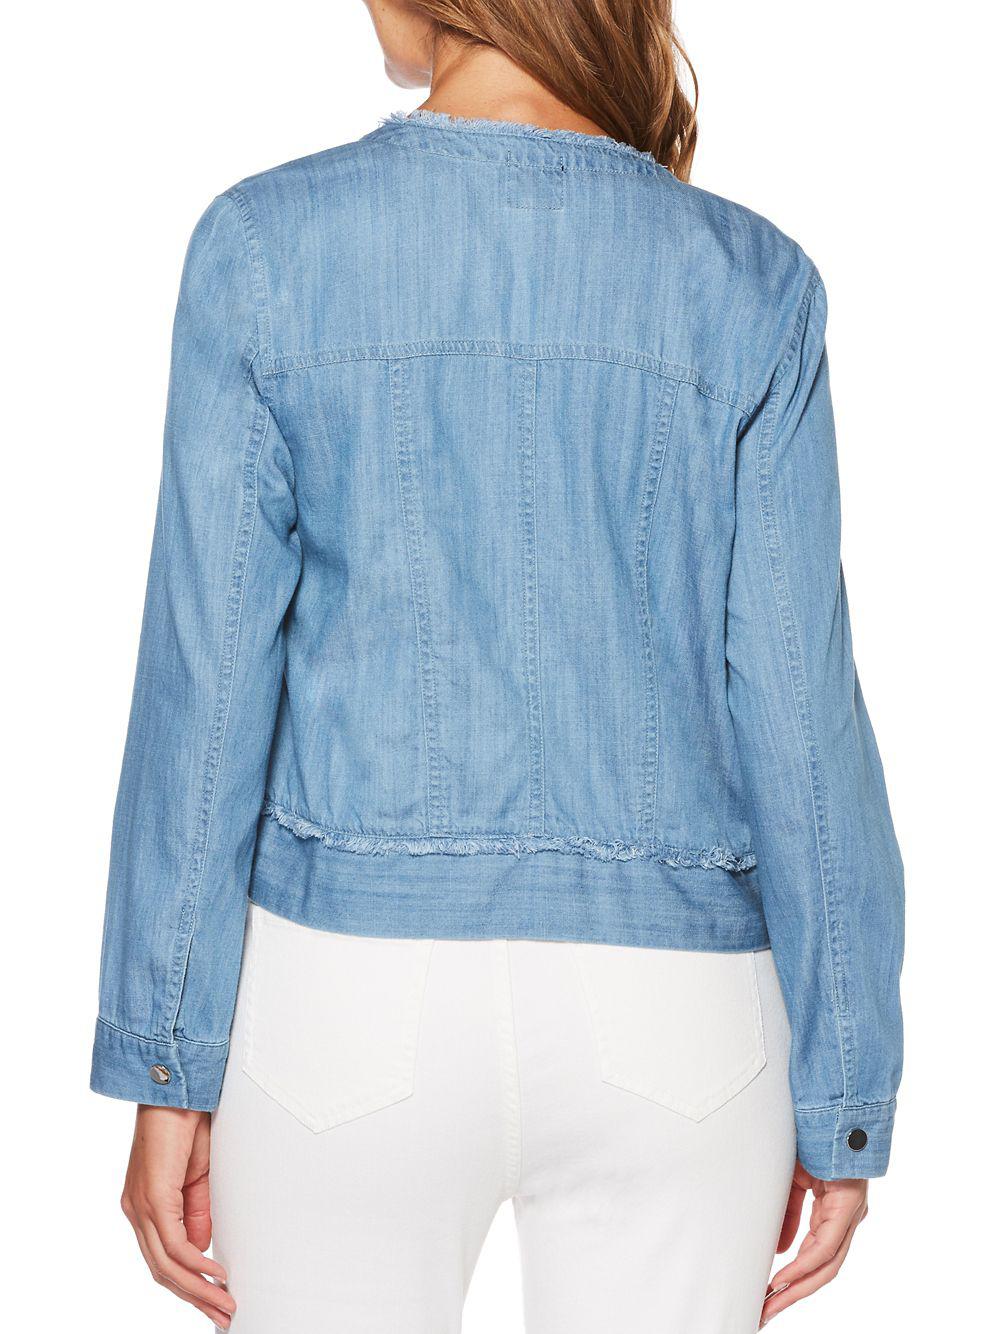 Rafaella Petite Classic Denim Jacket in Blue - Lyst